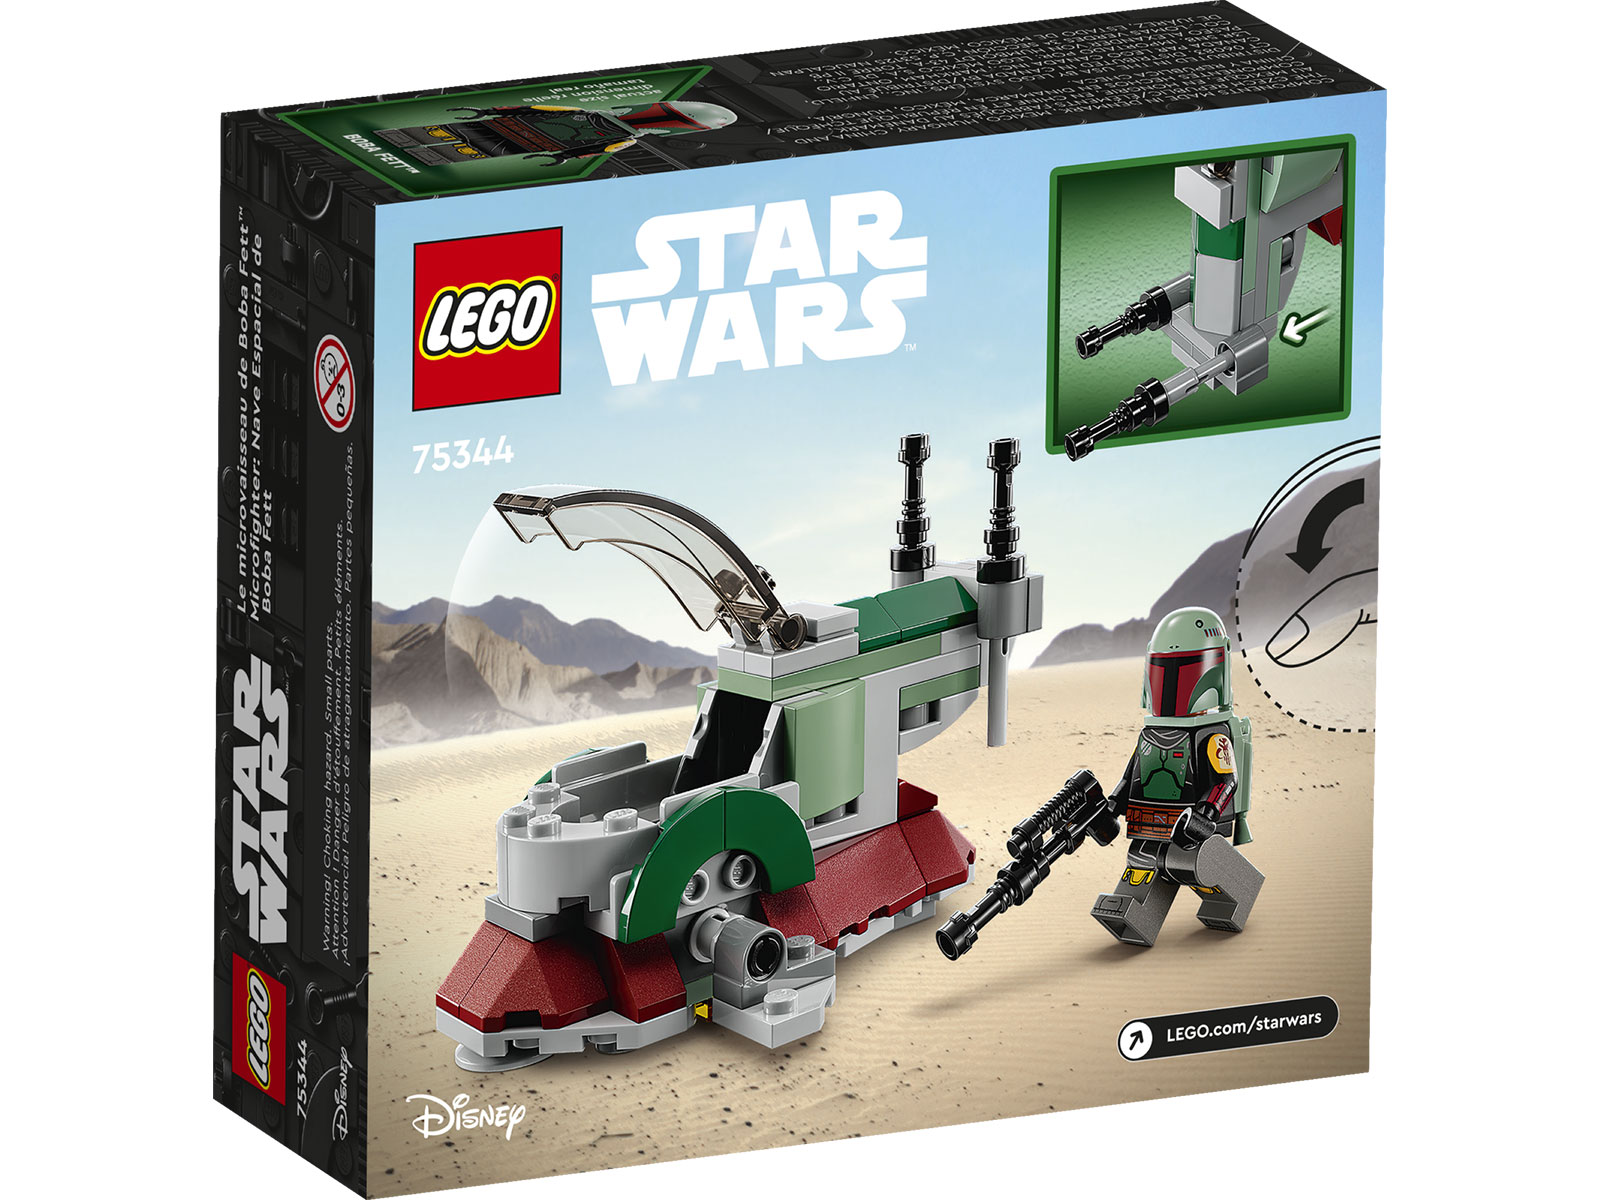 LEGO® Star Wars™ 75344 - Boba Fetts Starship™ – Microfighter